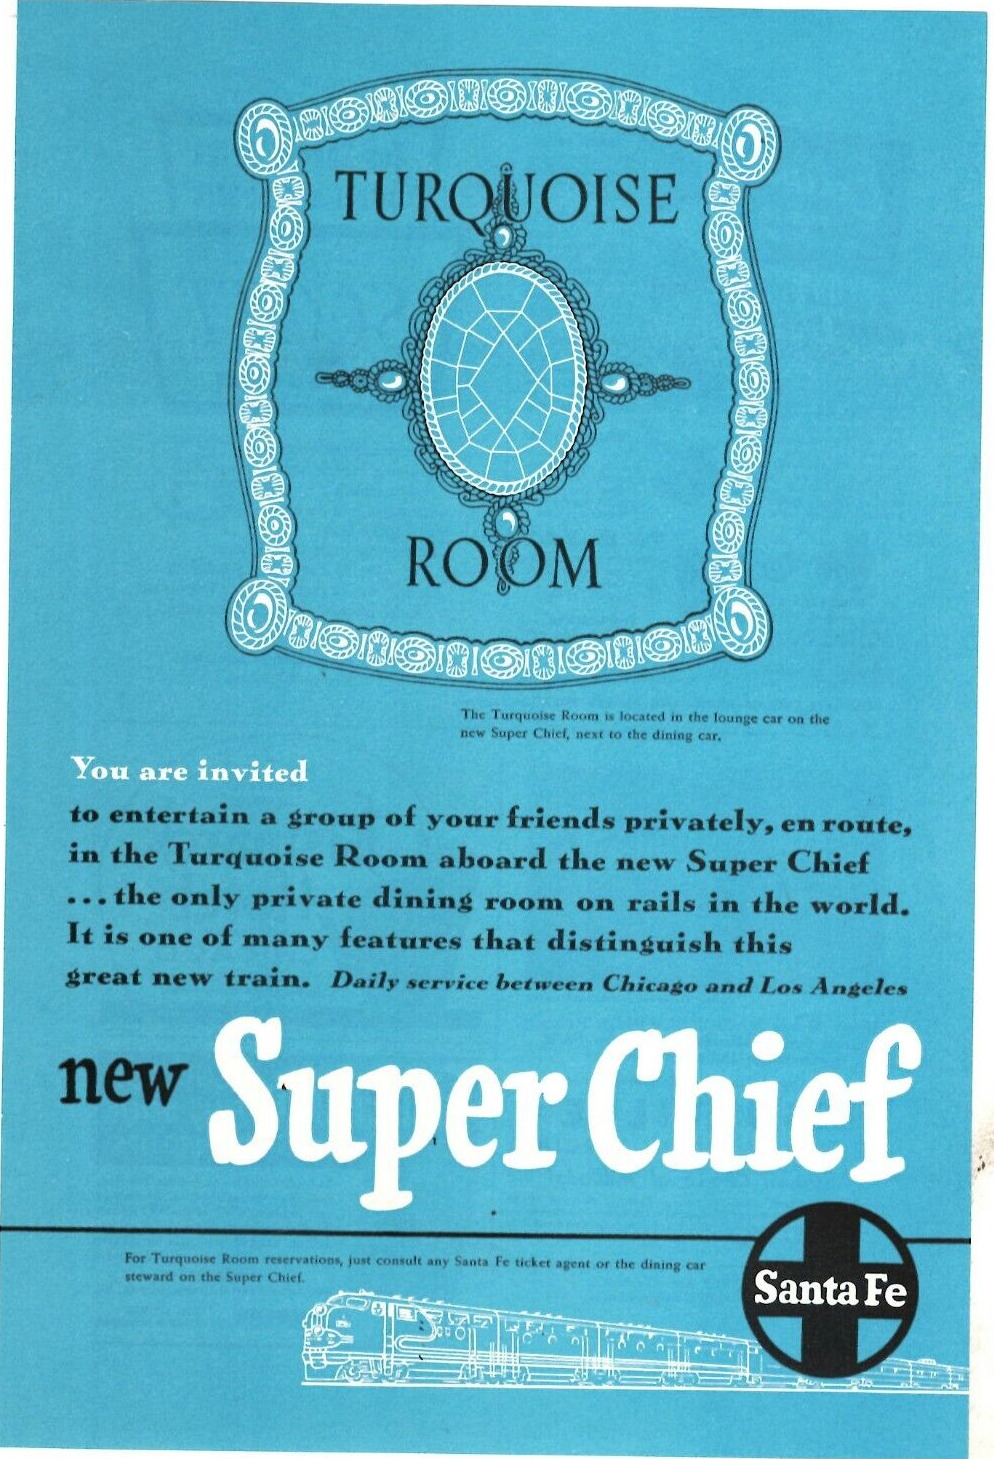 1951 Print Ad Santa Fe Railroad Turquoise Room Super Chief Private Dining Room